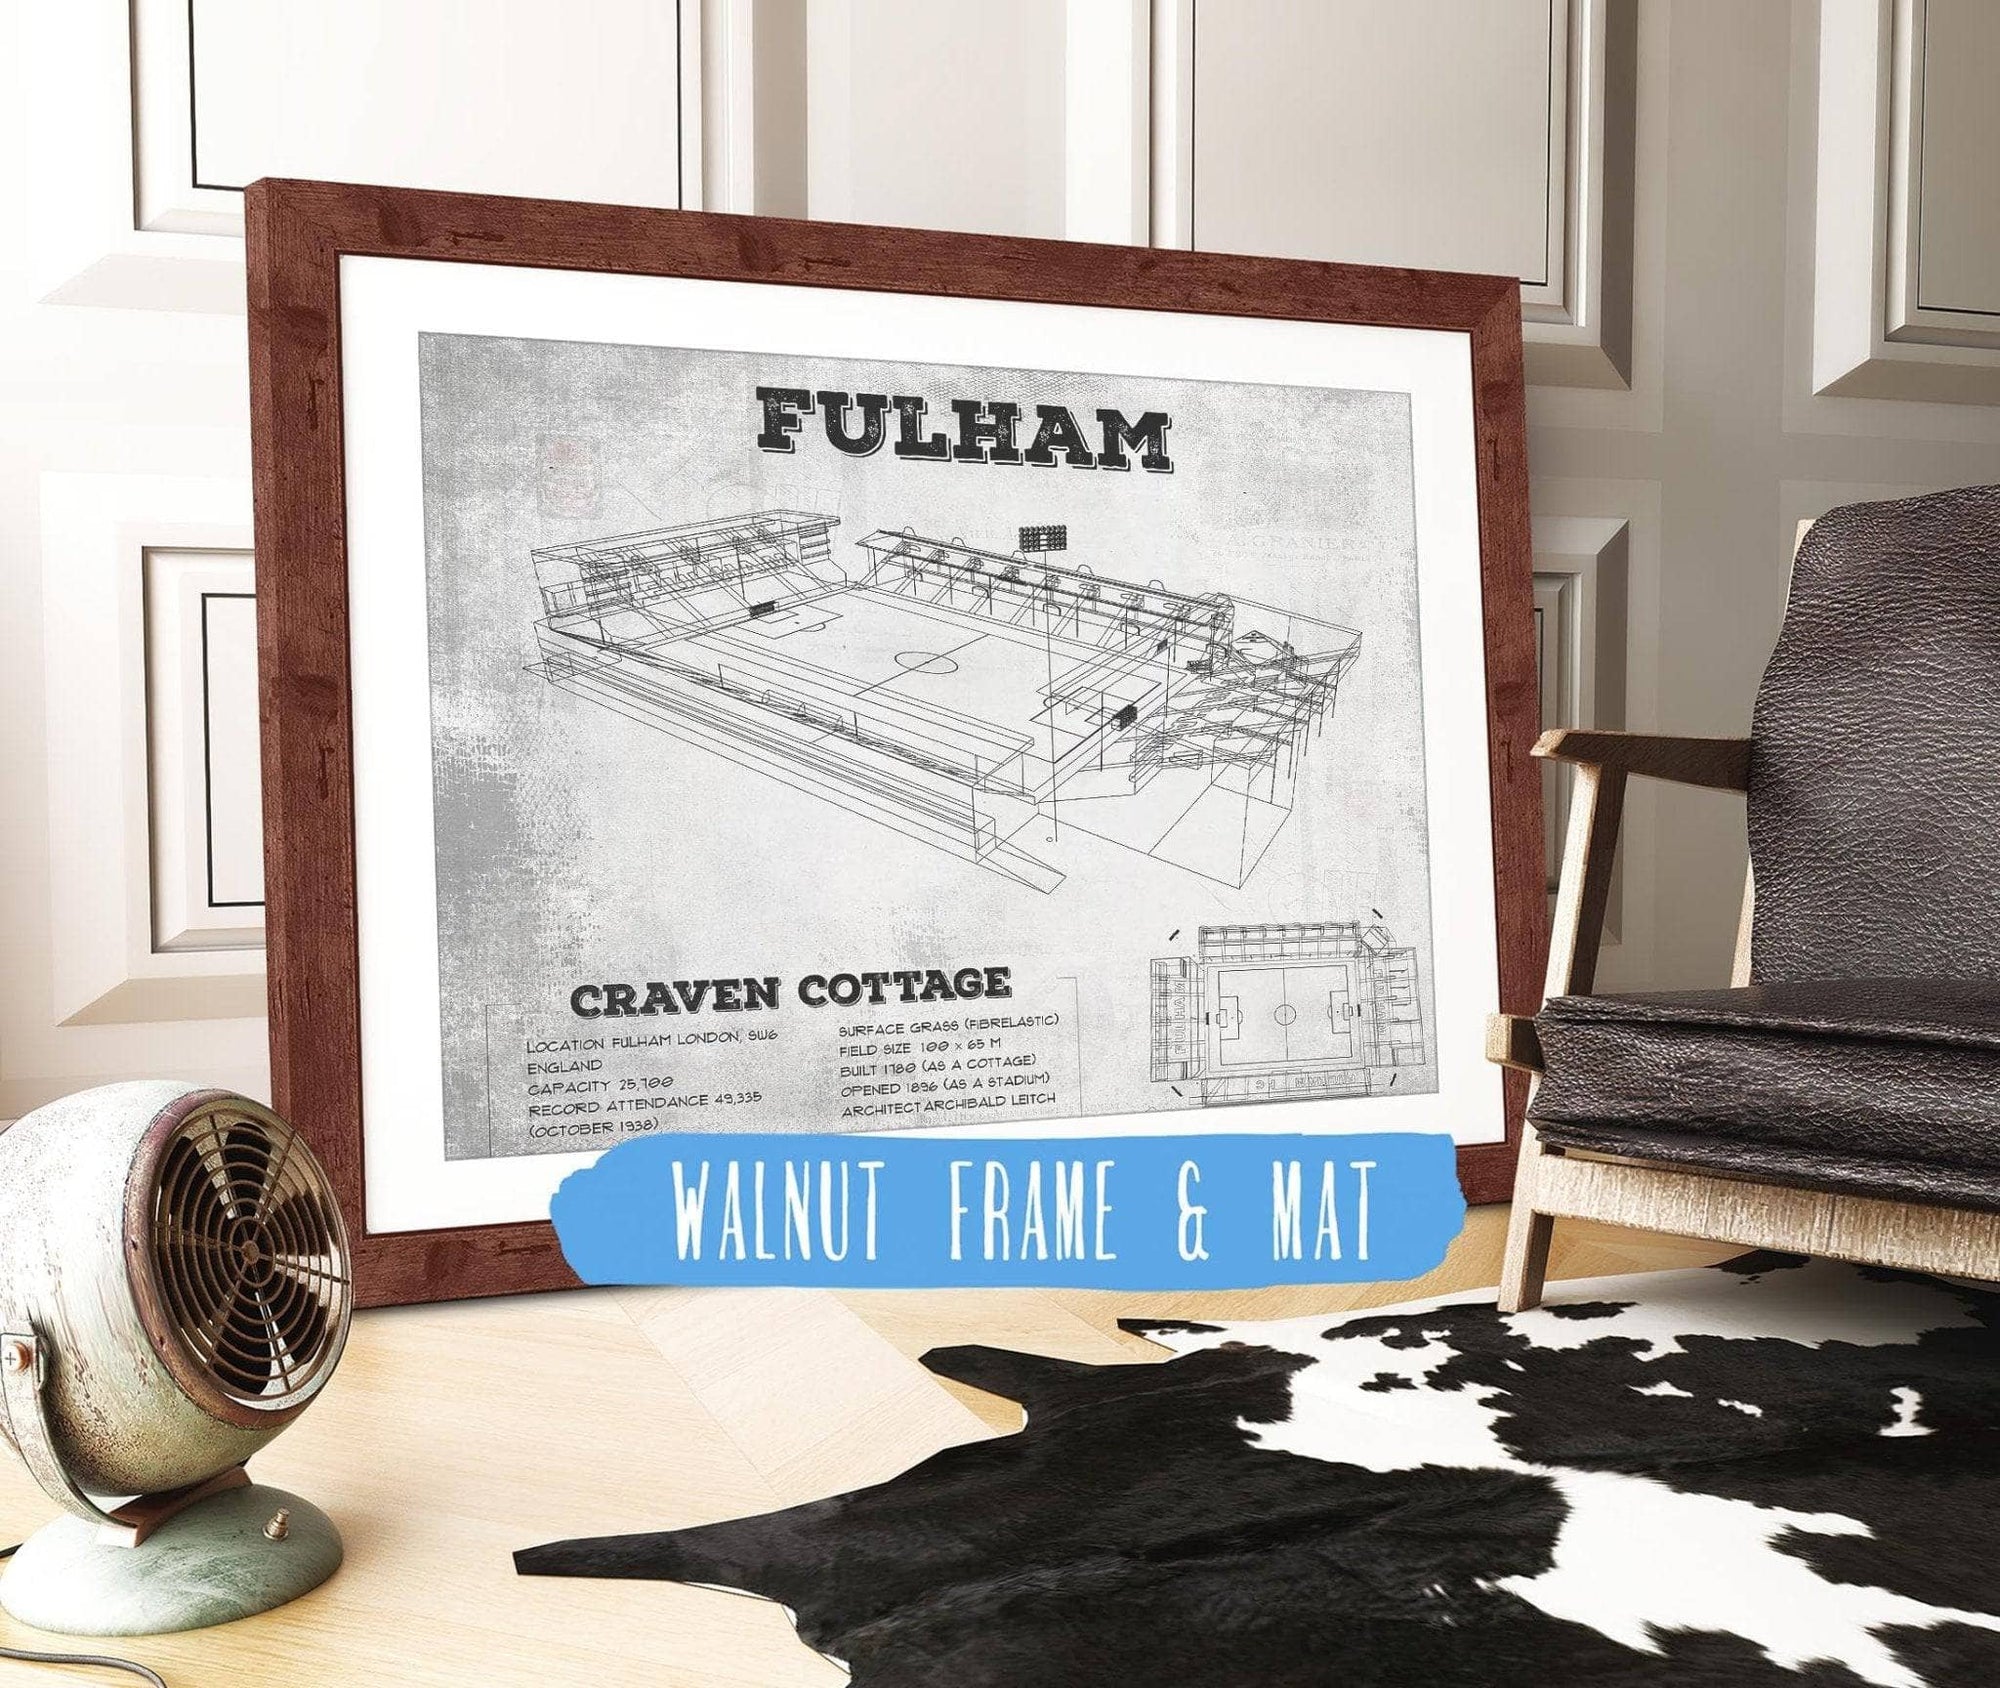 Cutler West Soccer Collection 14" x 11" / Walnut Frame & Mat Fulham Football Club Craven Cottage Vintage Soccer Print 737087842_66709